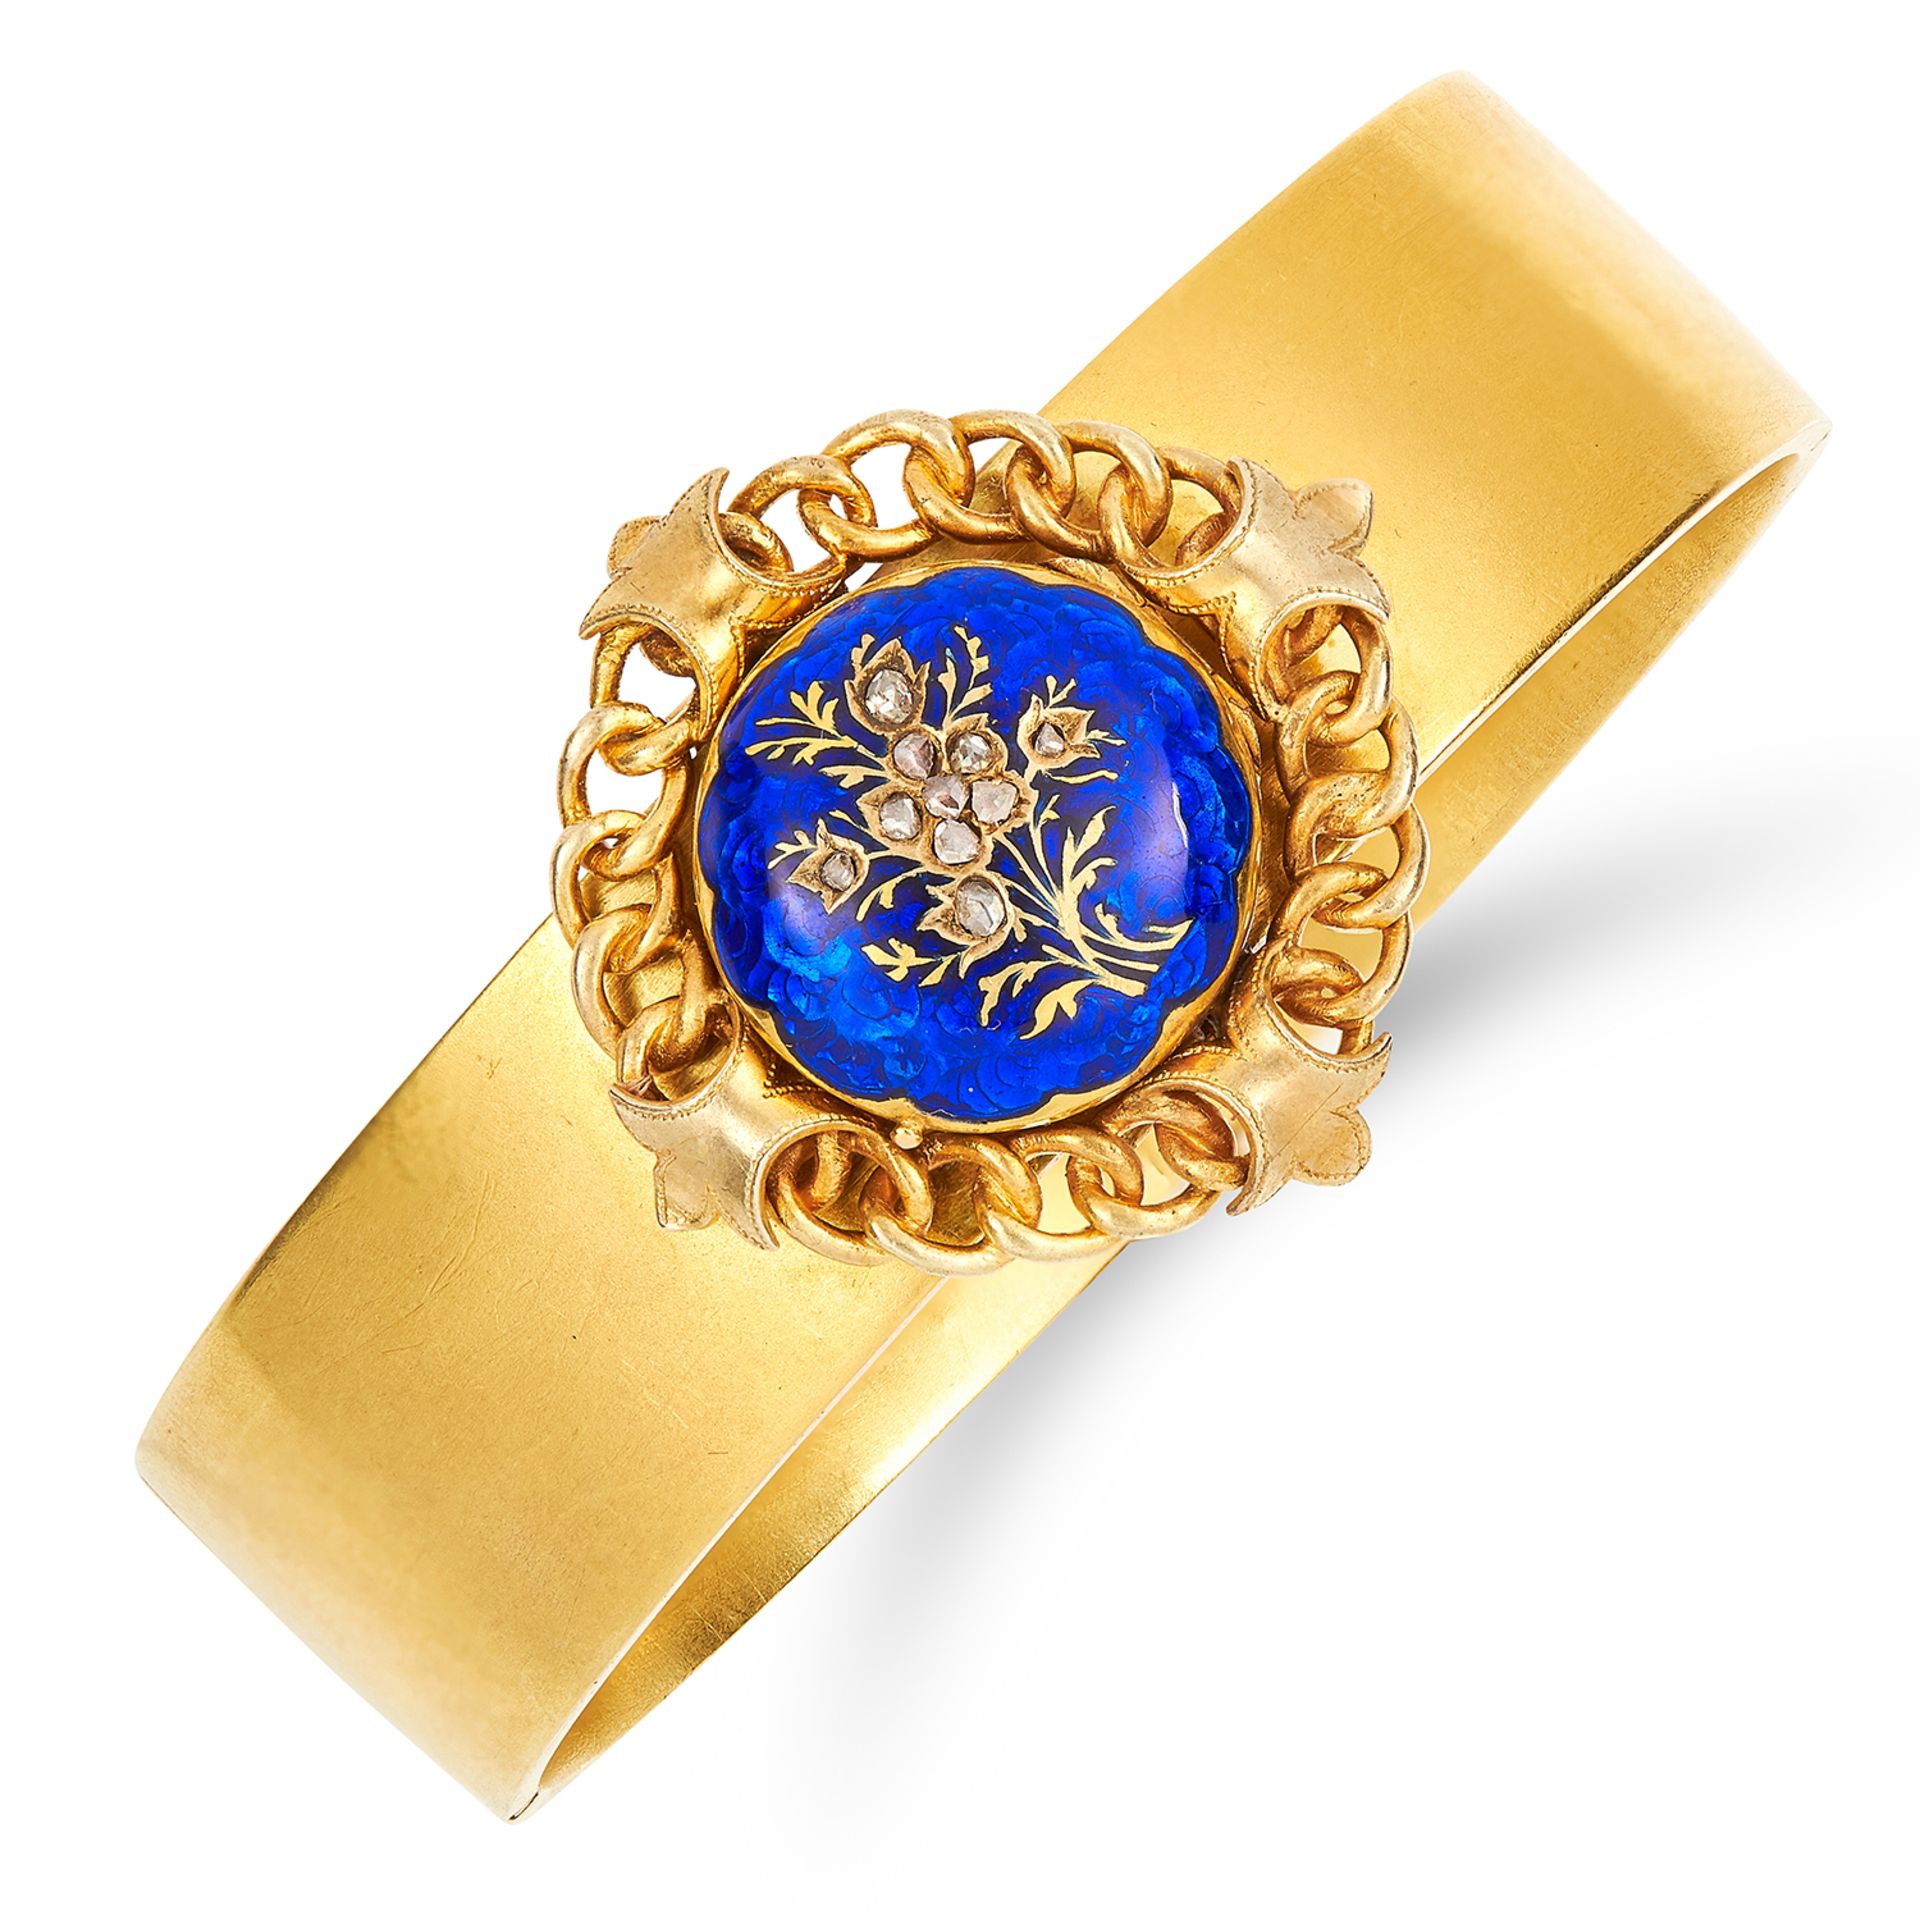 ANTIQUE VICTORIAN ENAMEL AND DIAMOND LOCKET BANGLE set with an open locket set with blue enamel